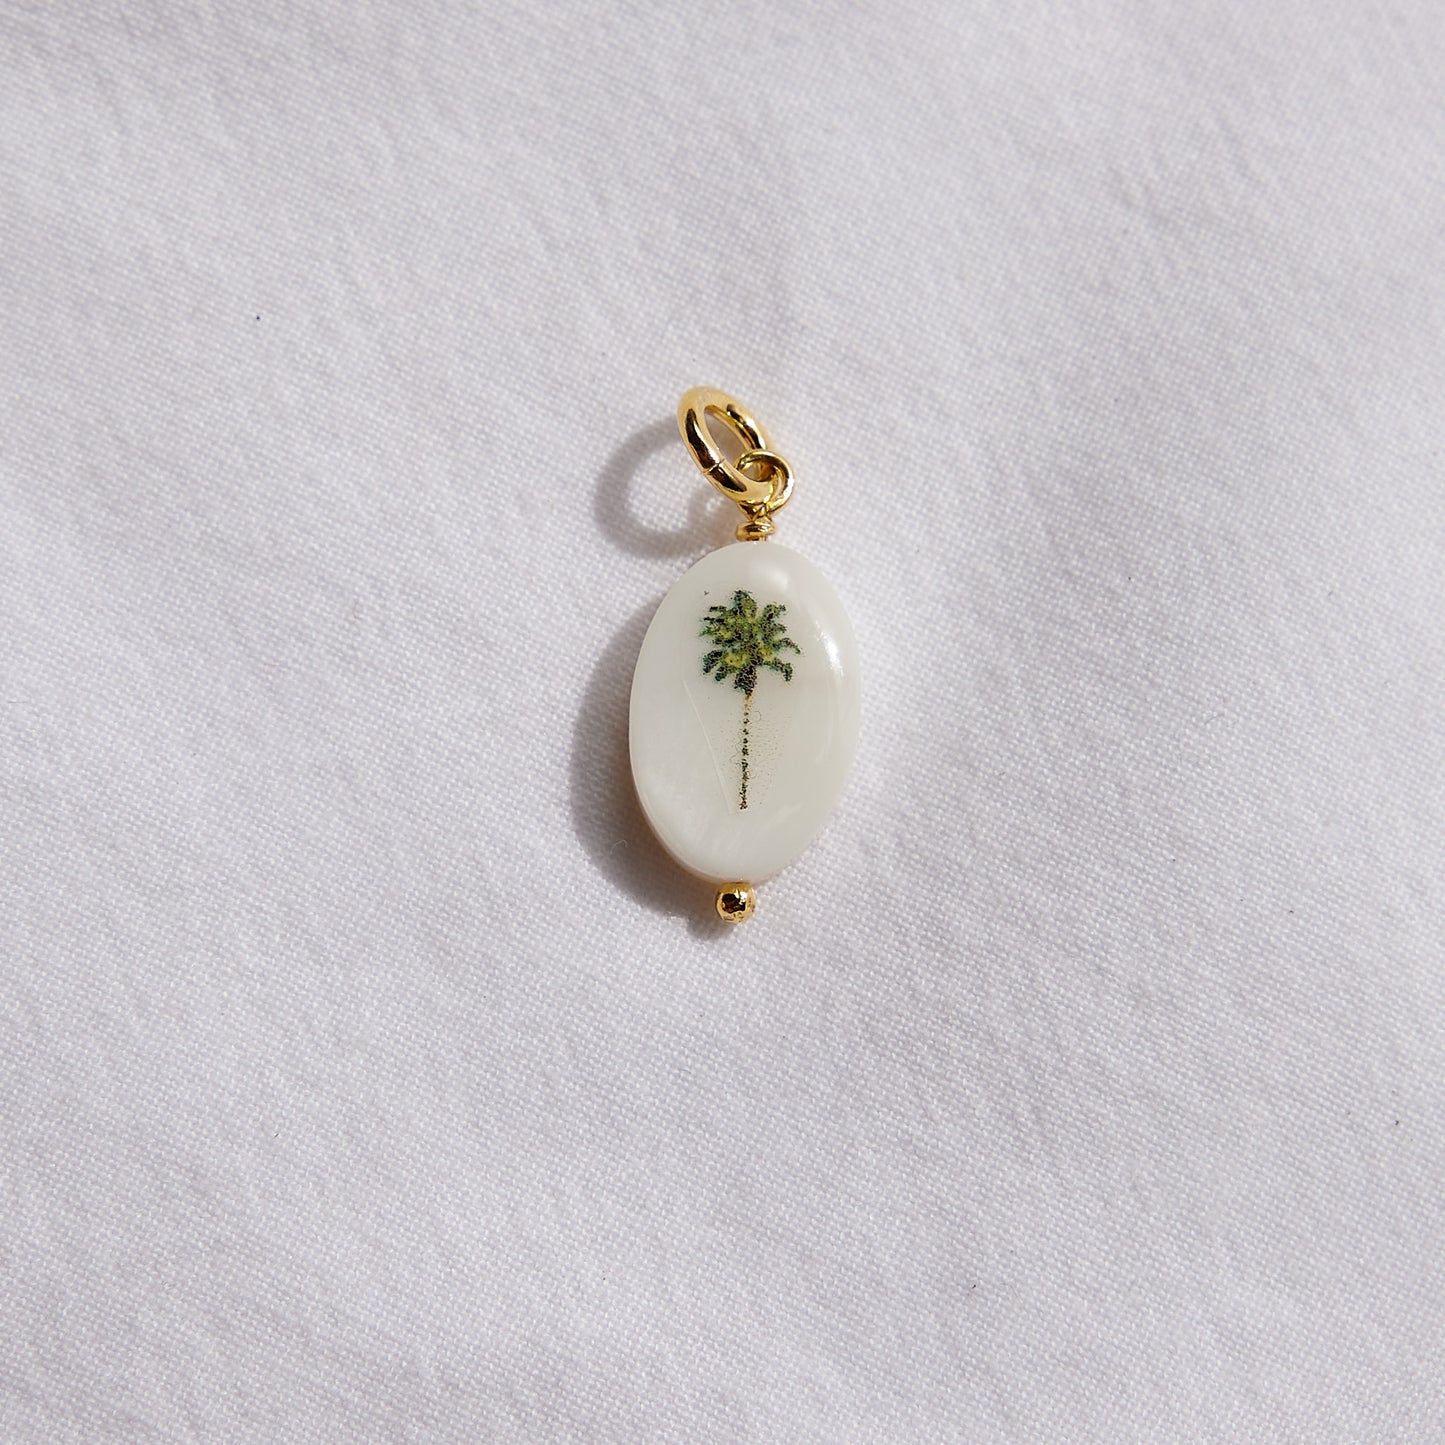 Palm Tree small oval pendant